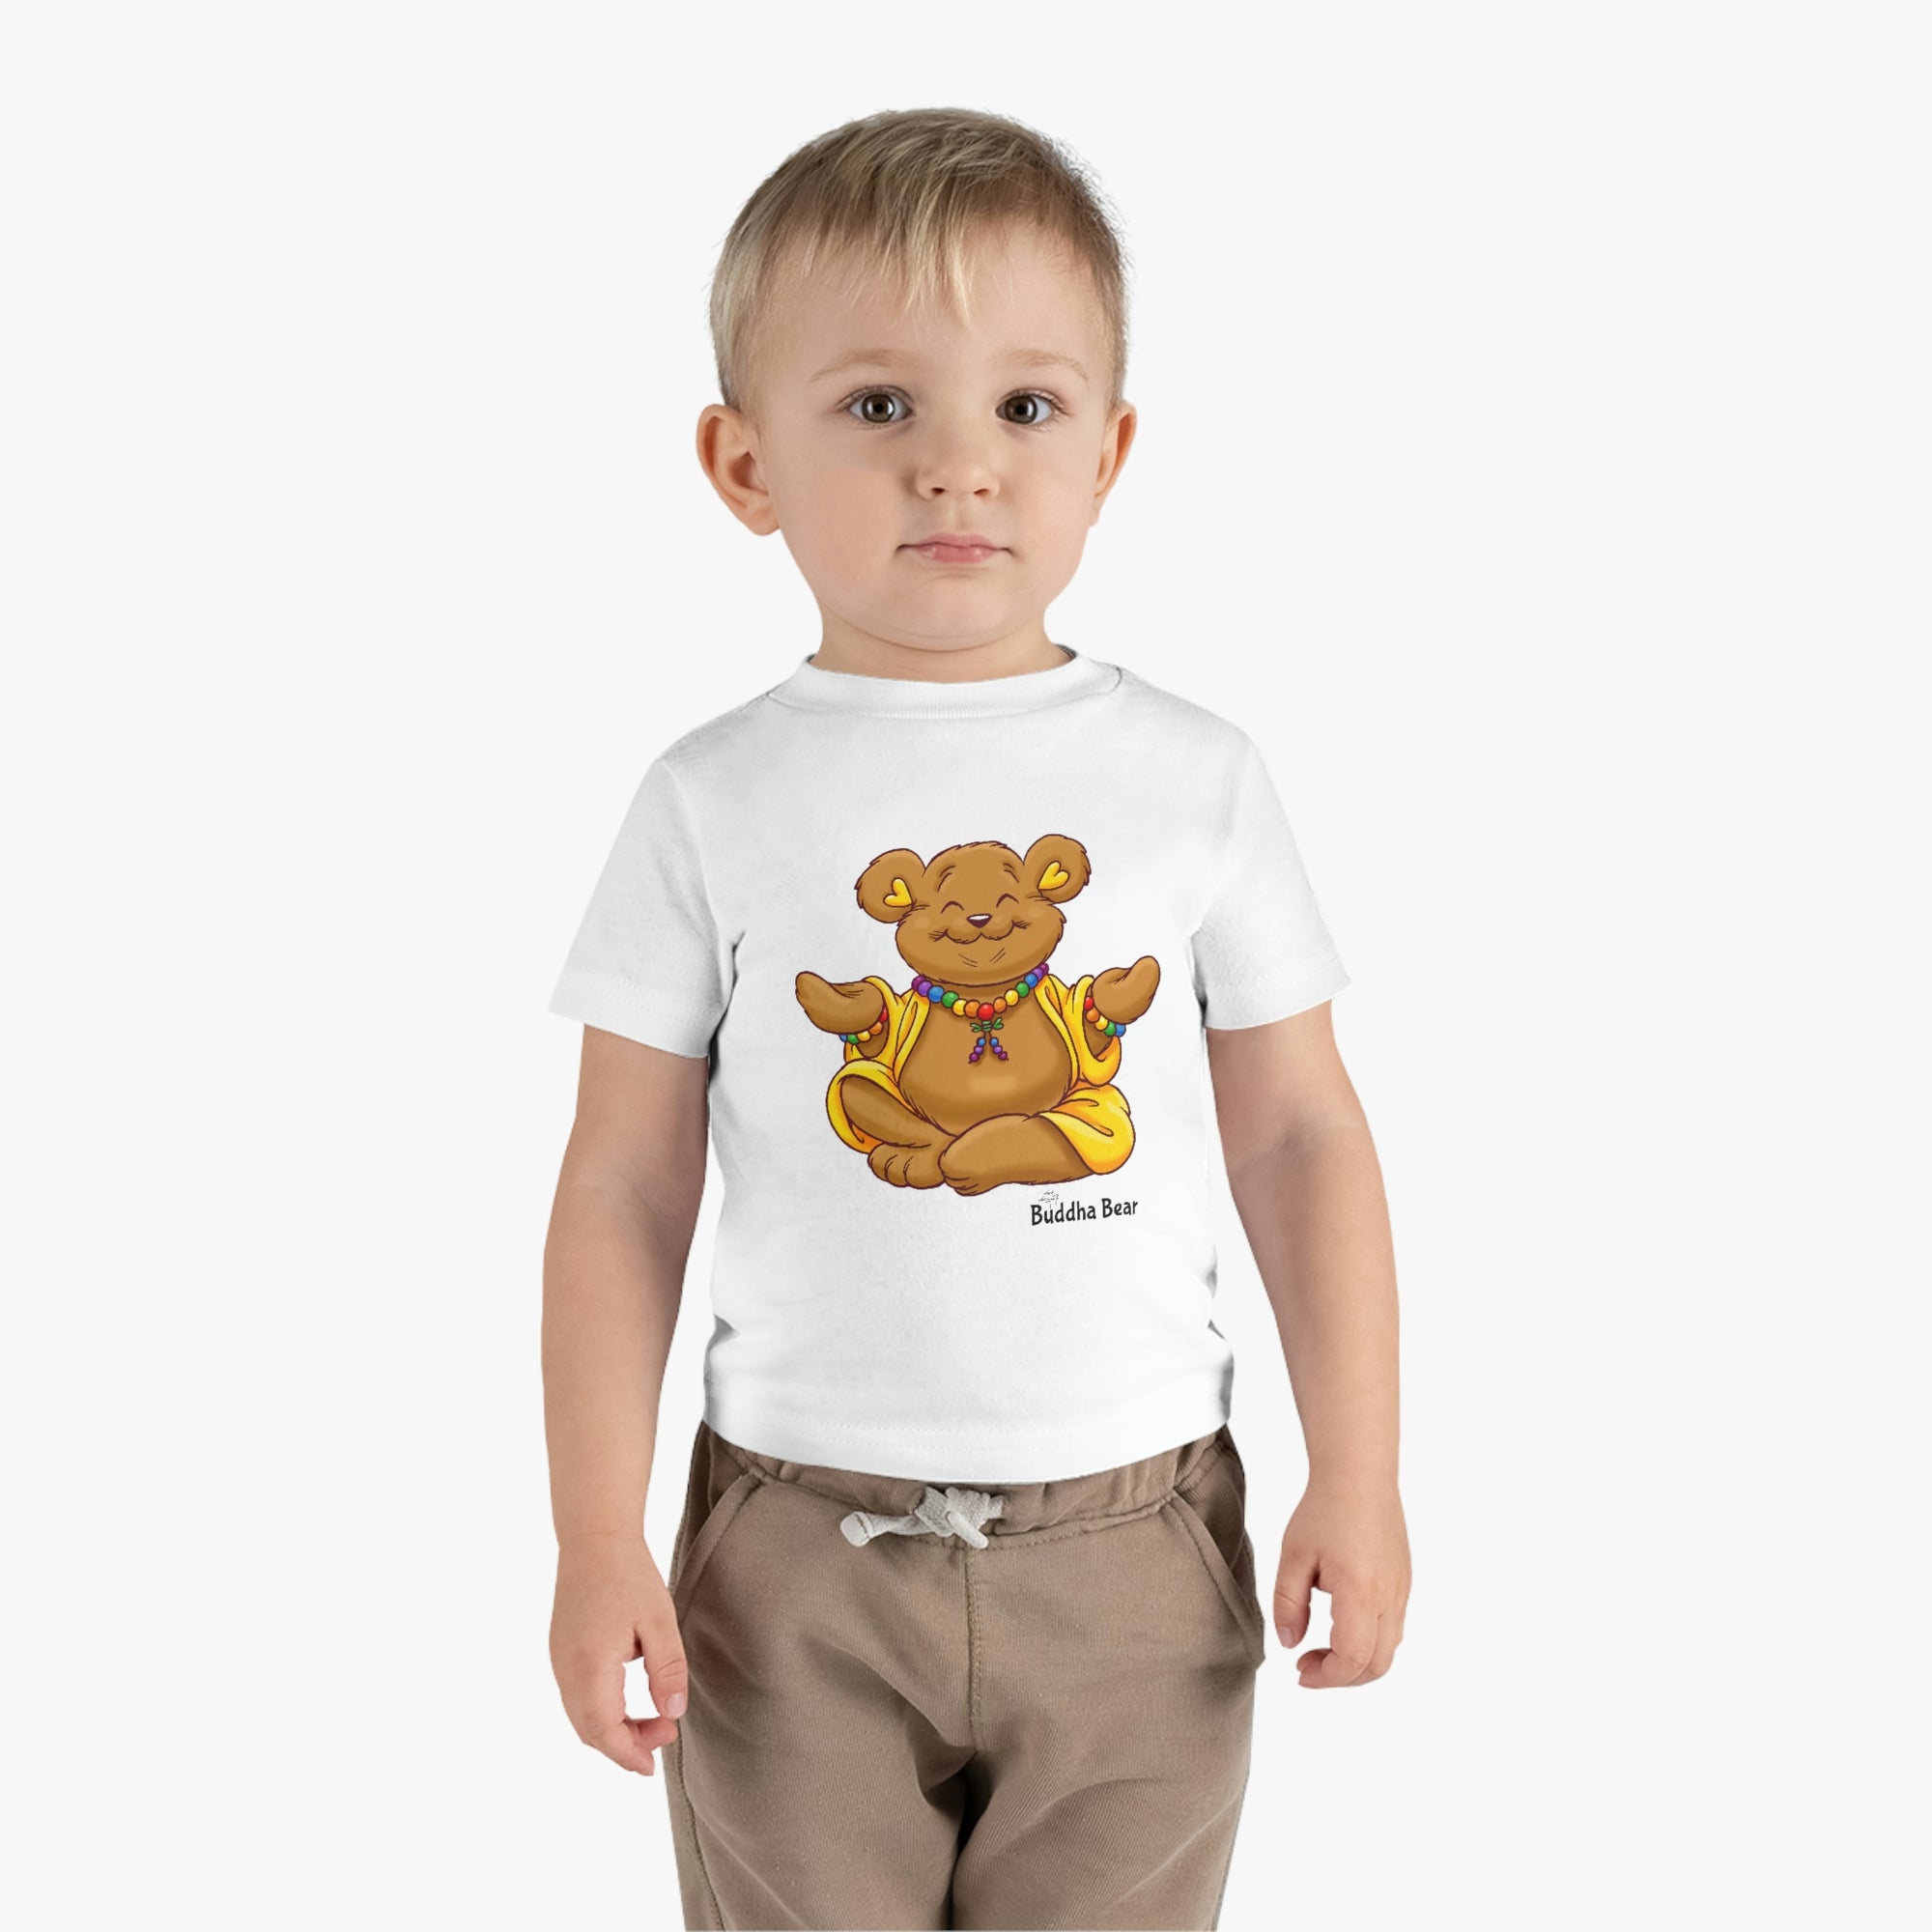 Buddha Bear's Infant Cotton Jersey Tee